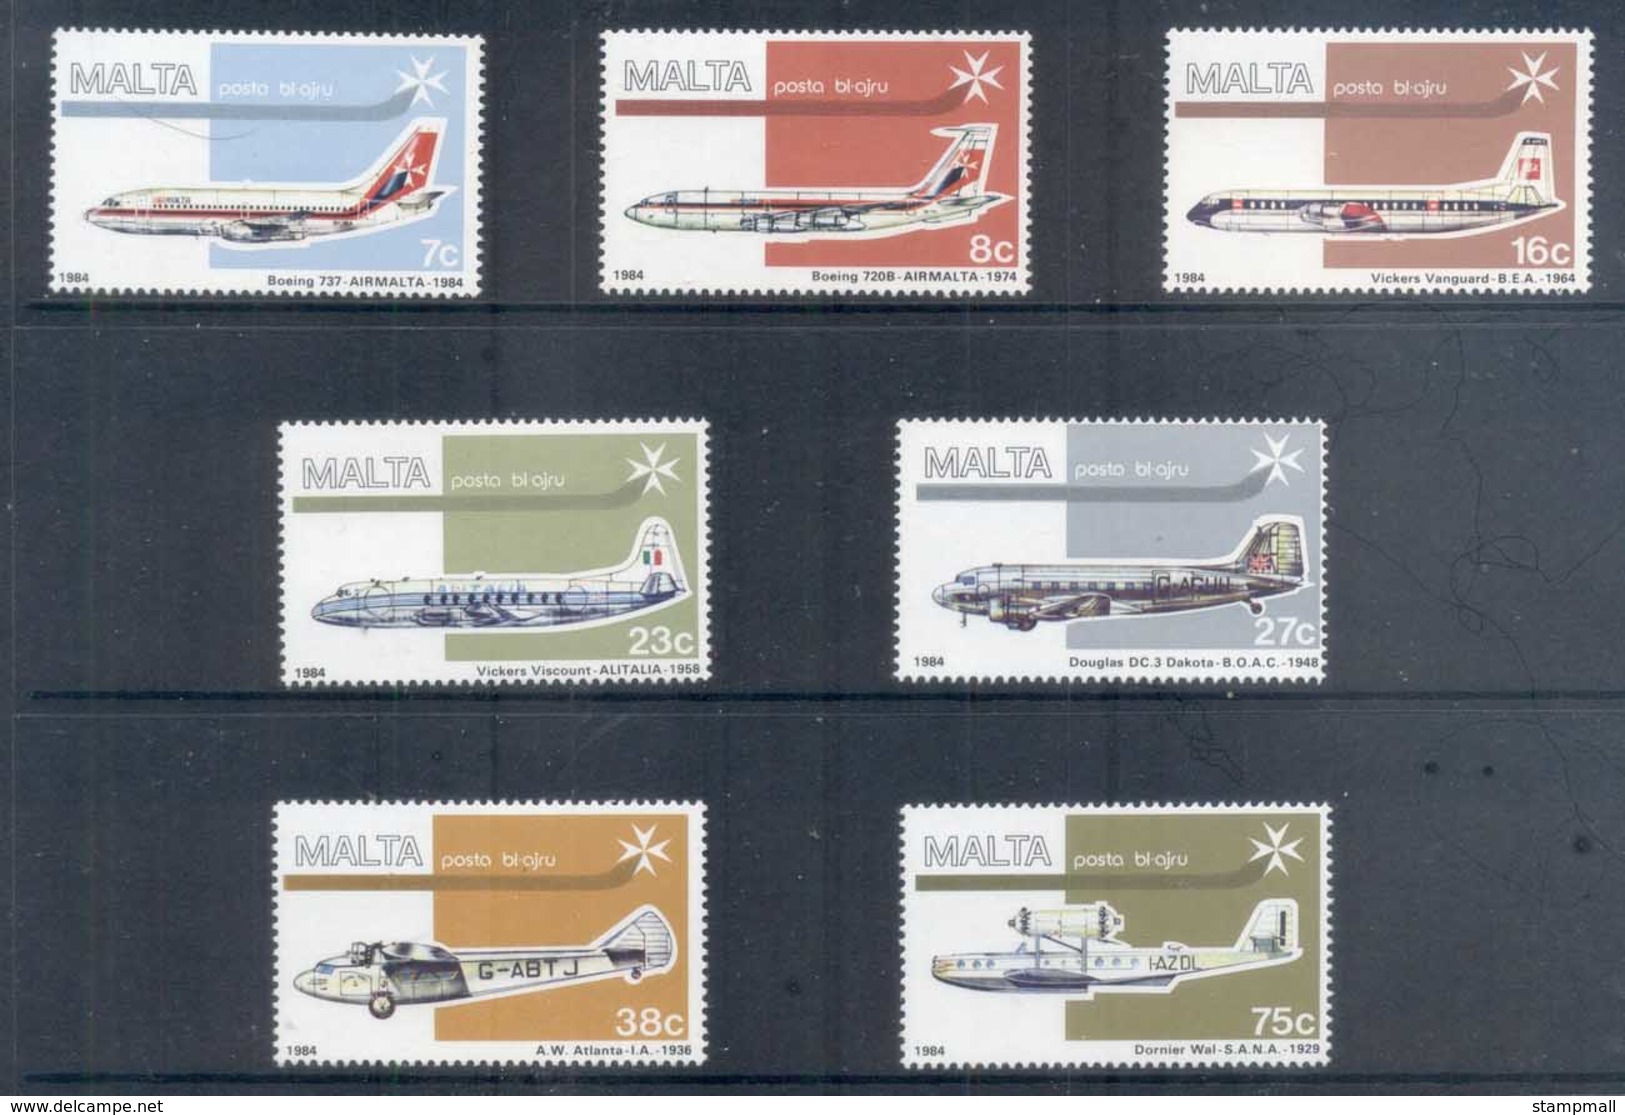 Malta 1984 Air Mail, Airplanes MUH - Malta